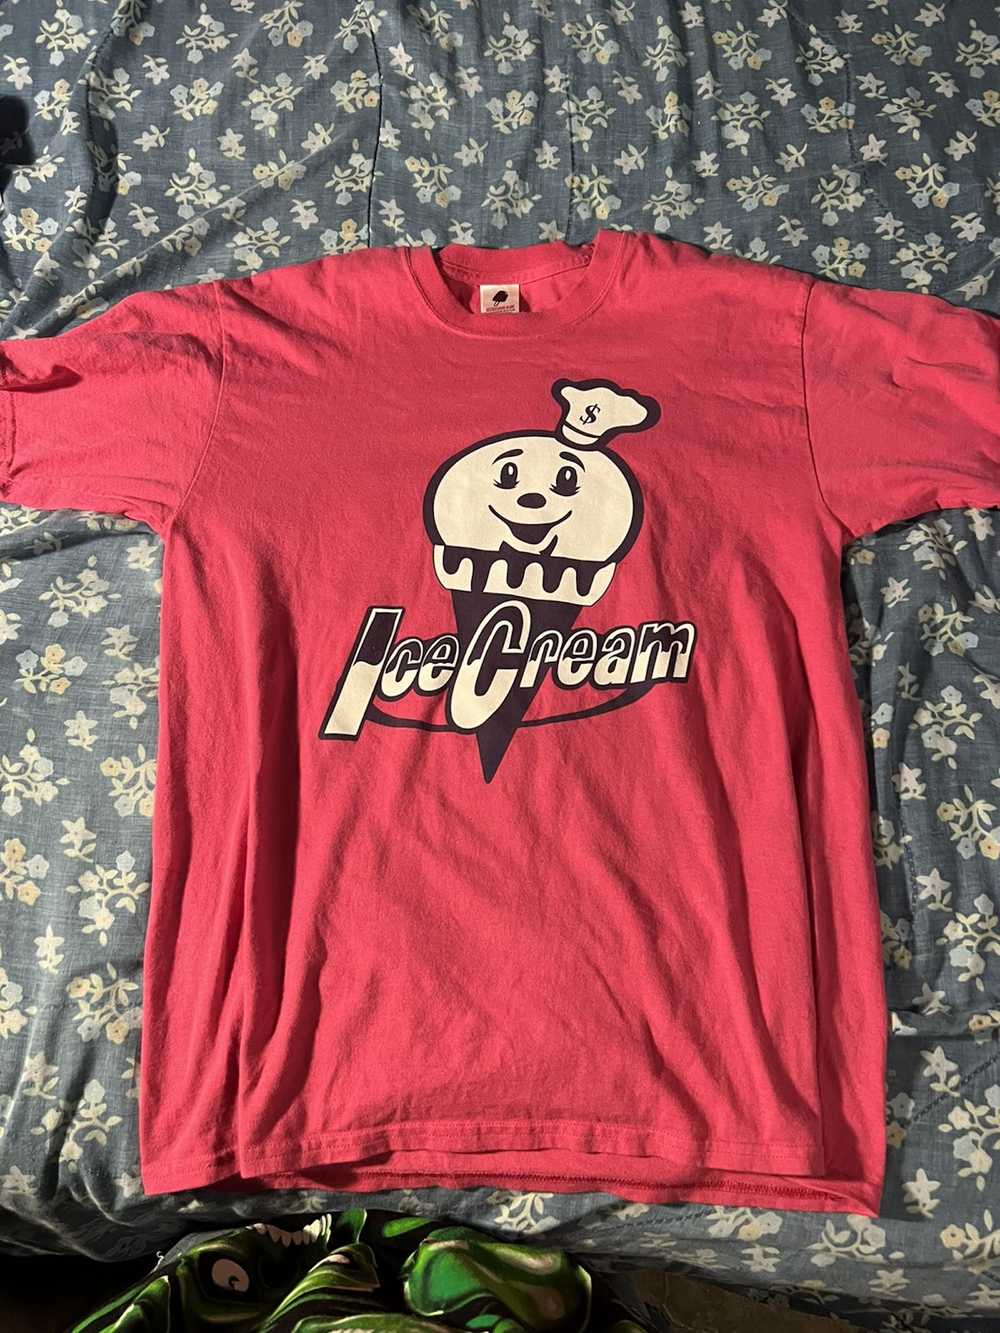 Icecream Ice cream shirt - image 1